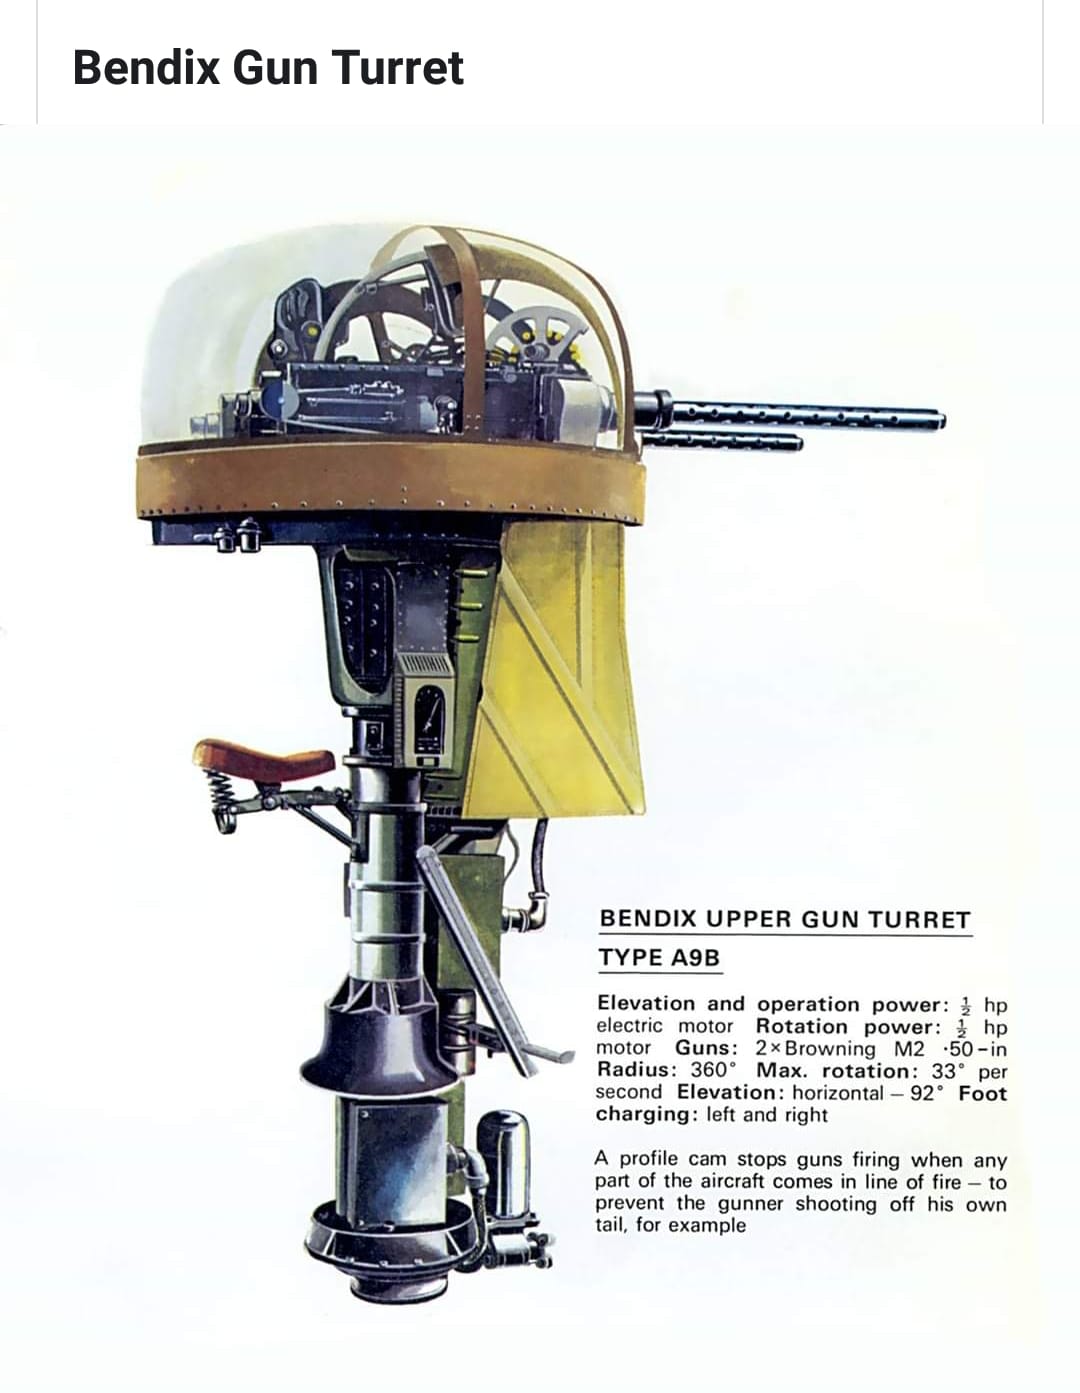 bendix gun turret.jpg